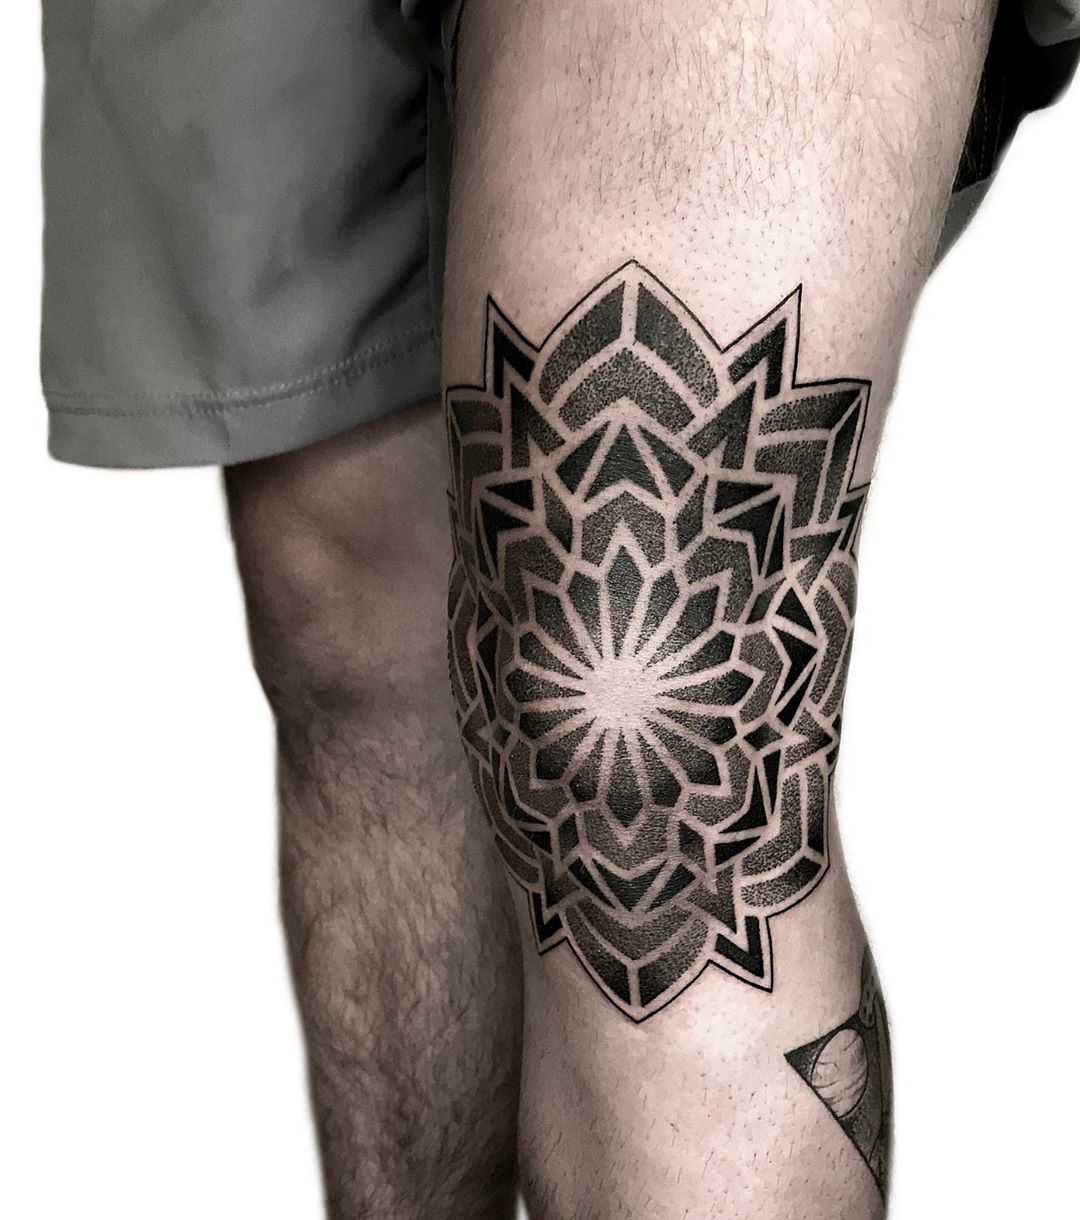 Dot-work knee mandala by tattooist Neeno